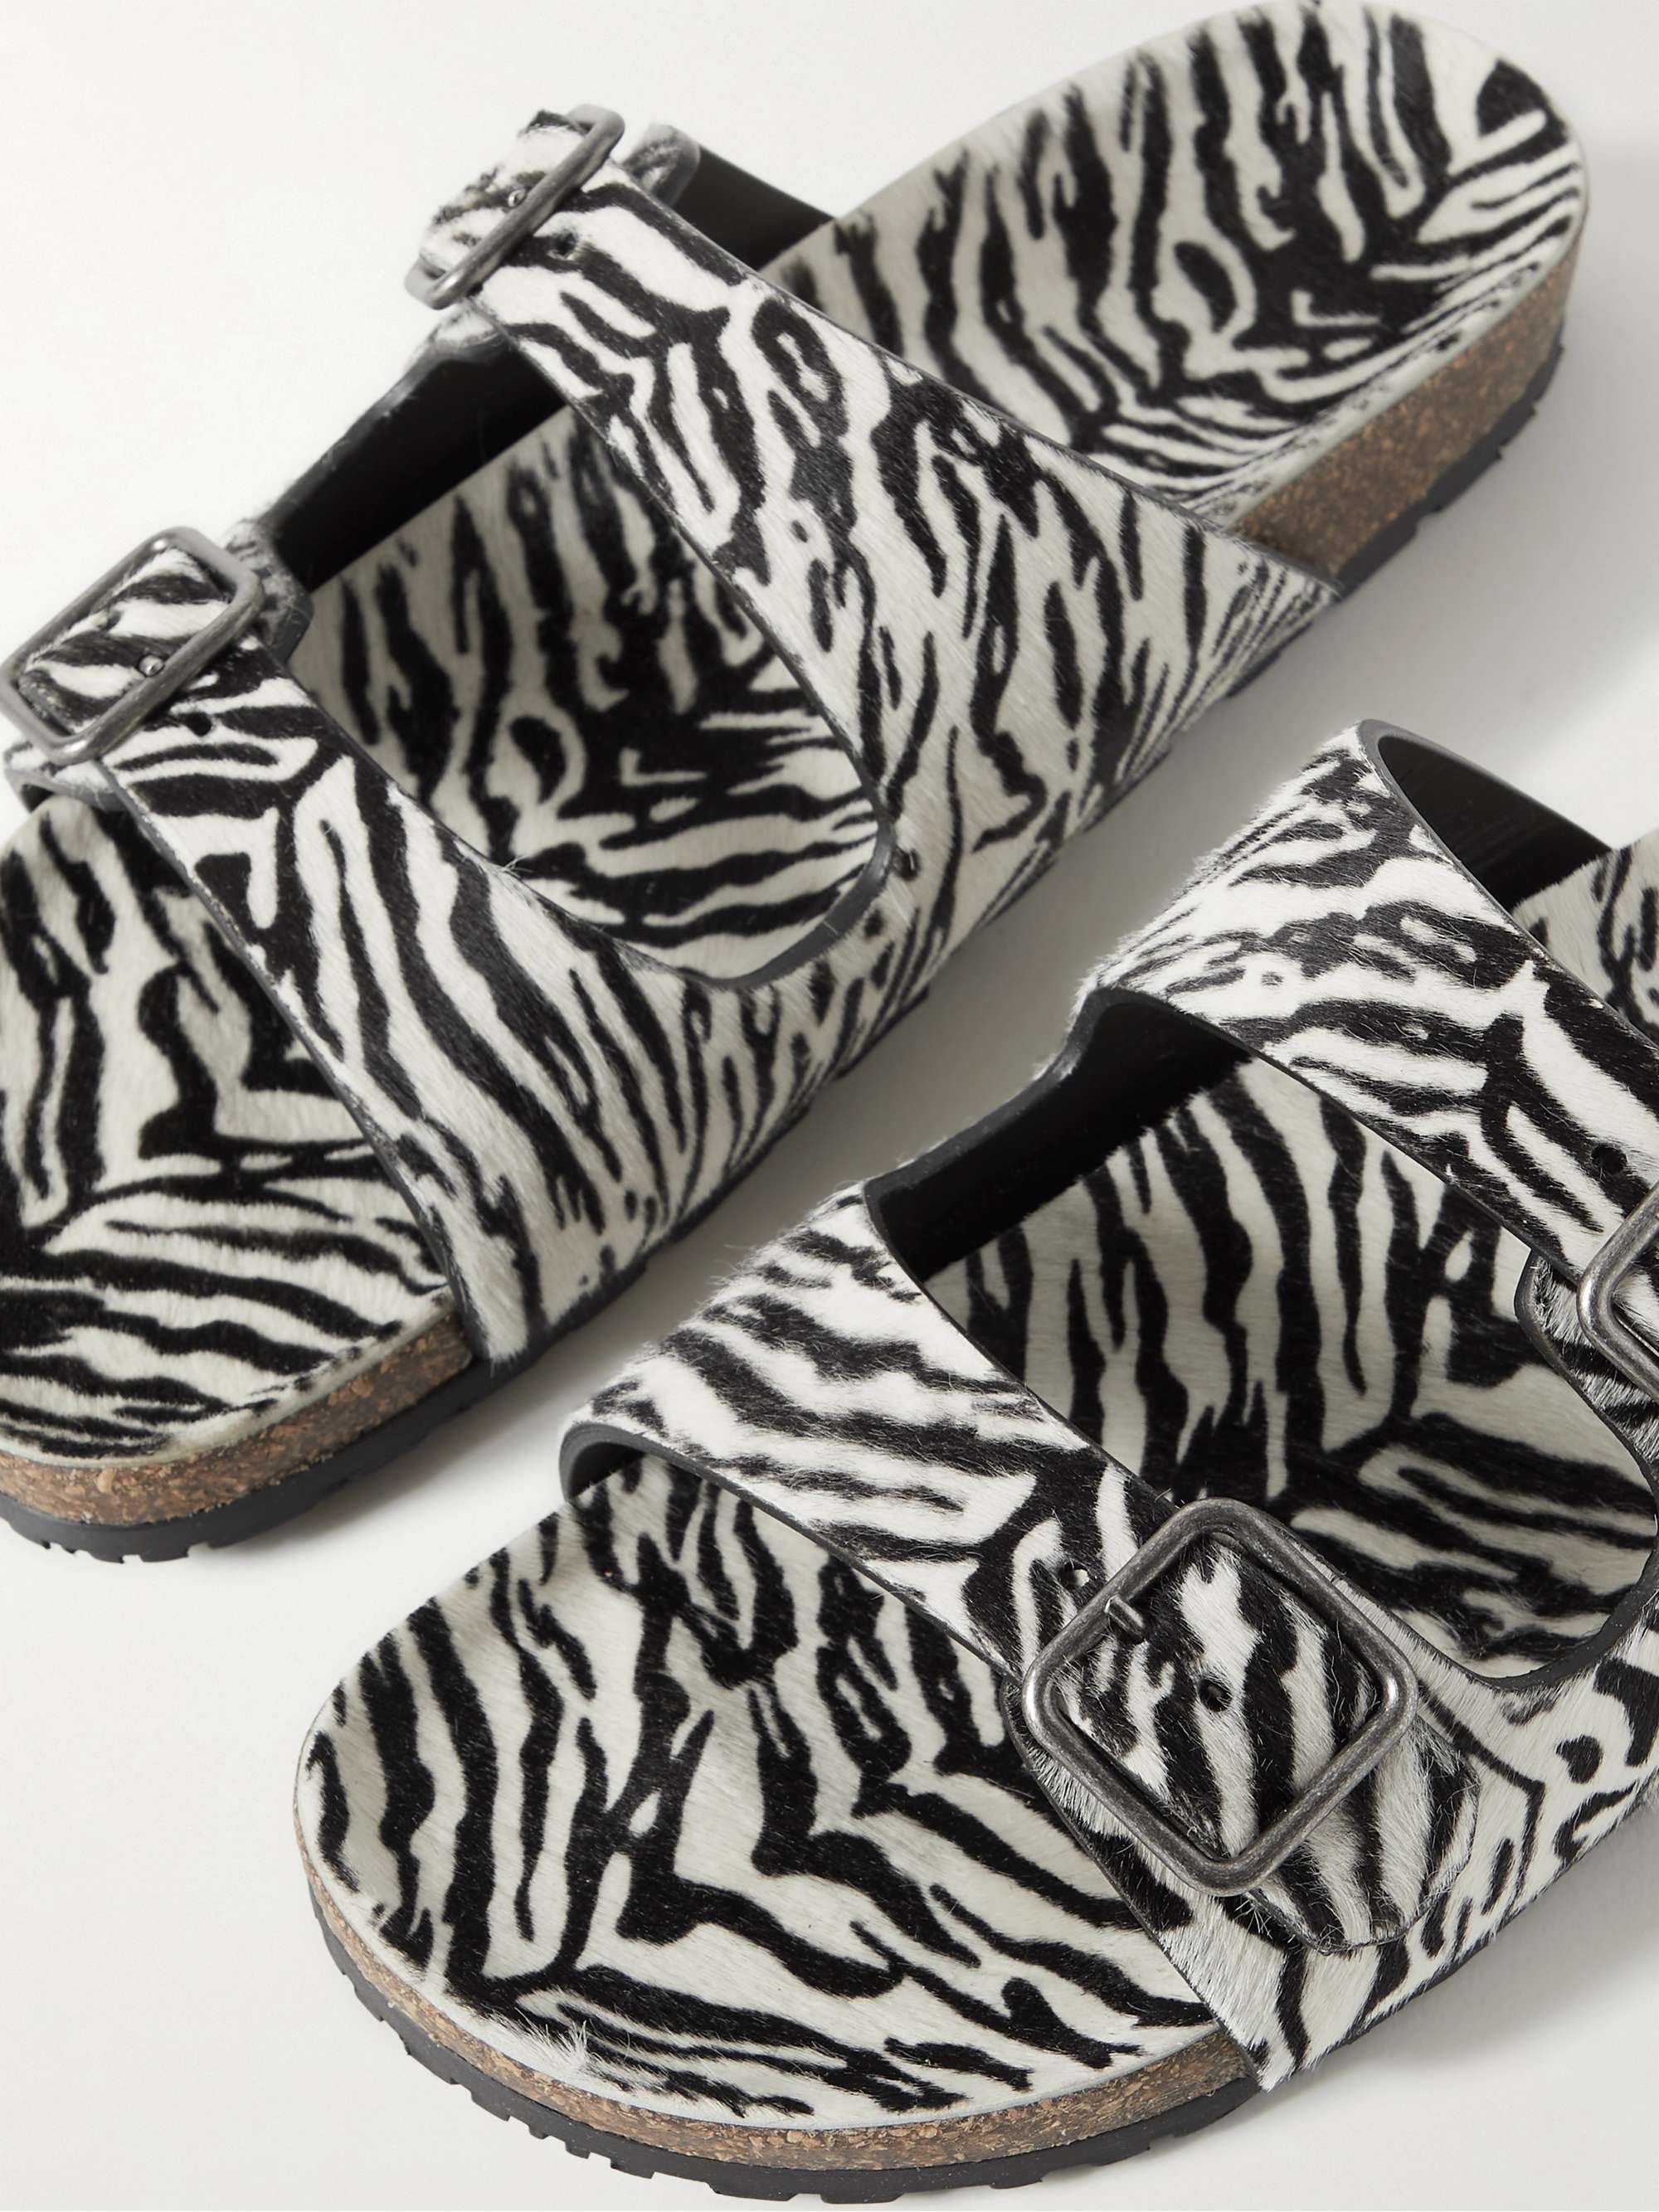 SAINT LAURENT Jimmy Zebra-Print Calf Hair Sandals